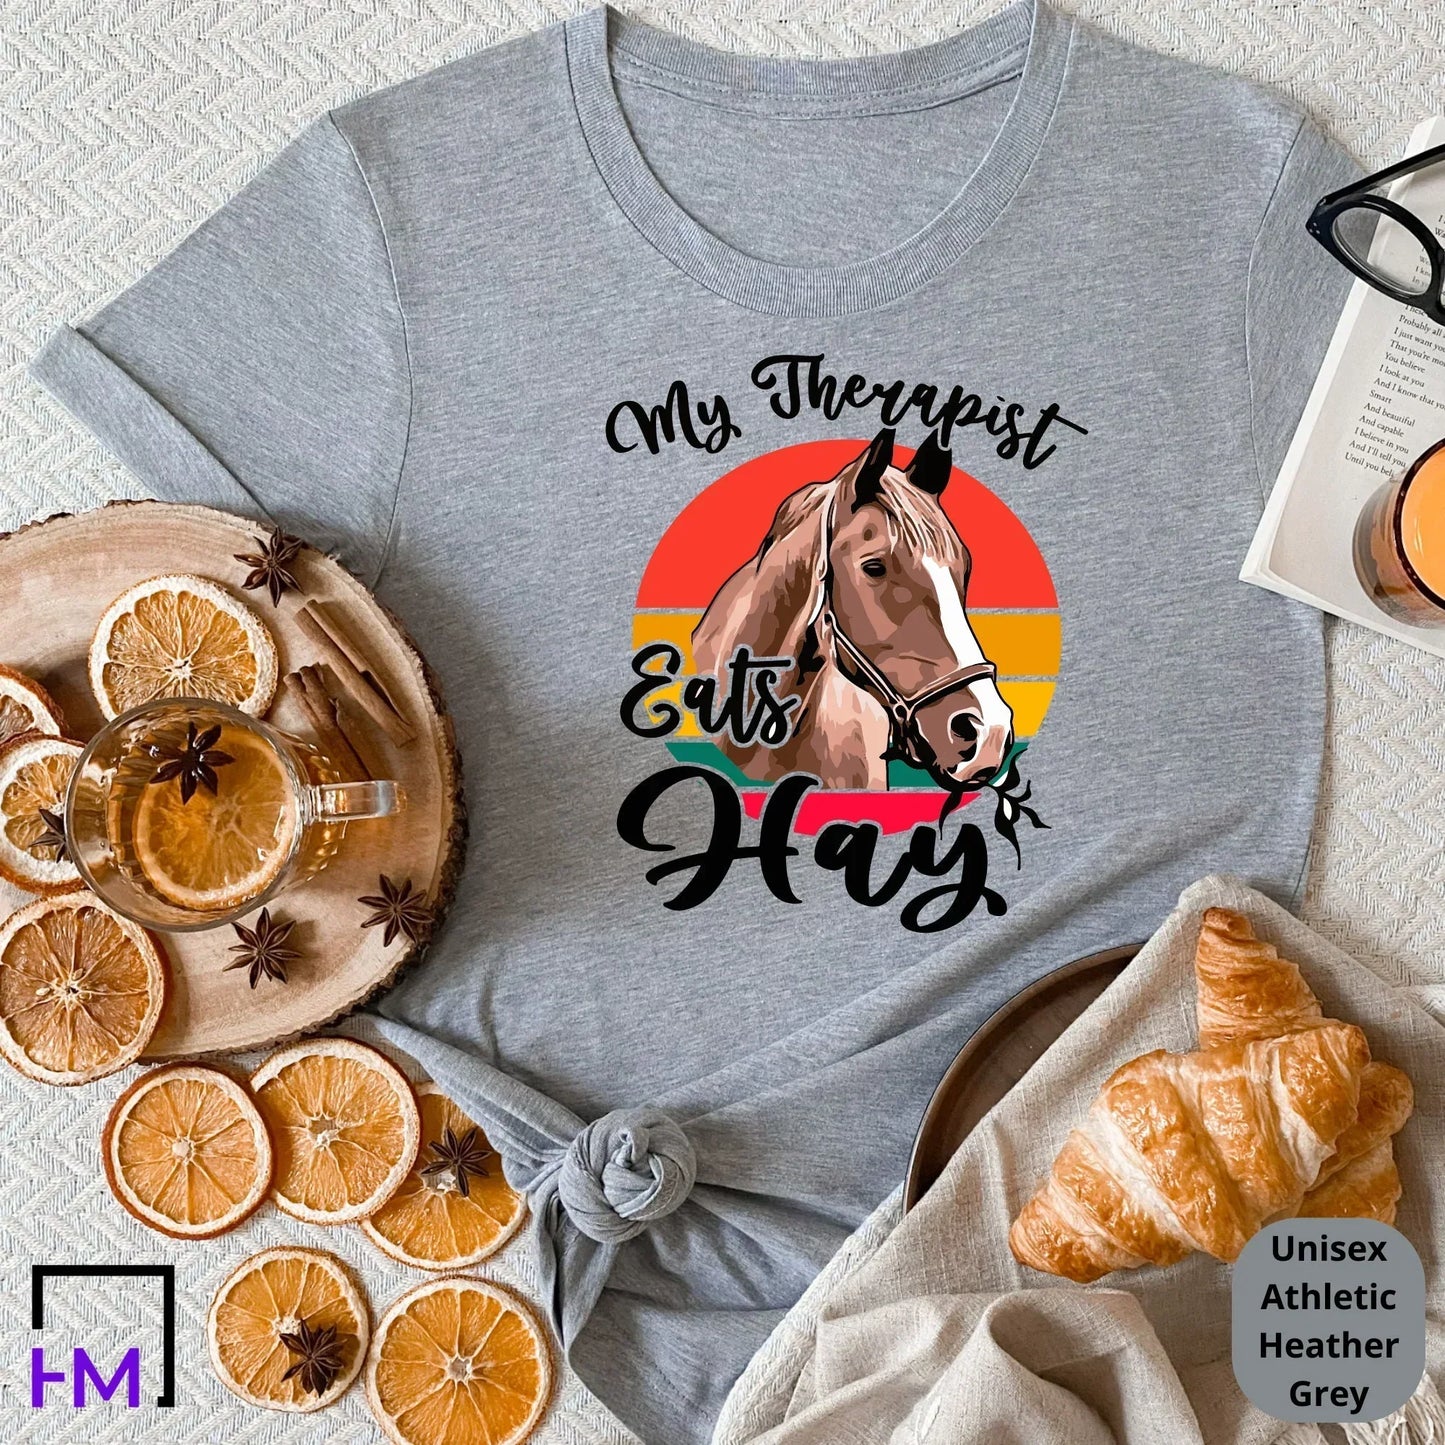 Funny Horse Shirt, Horse Rider Gift, Equestrian Therapist Sweater, Horse Lover Tee, Horse Lover Gift, Horseback Riding Sport, Mental Health HMDesignStudioUS